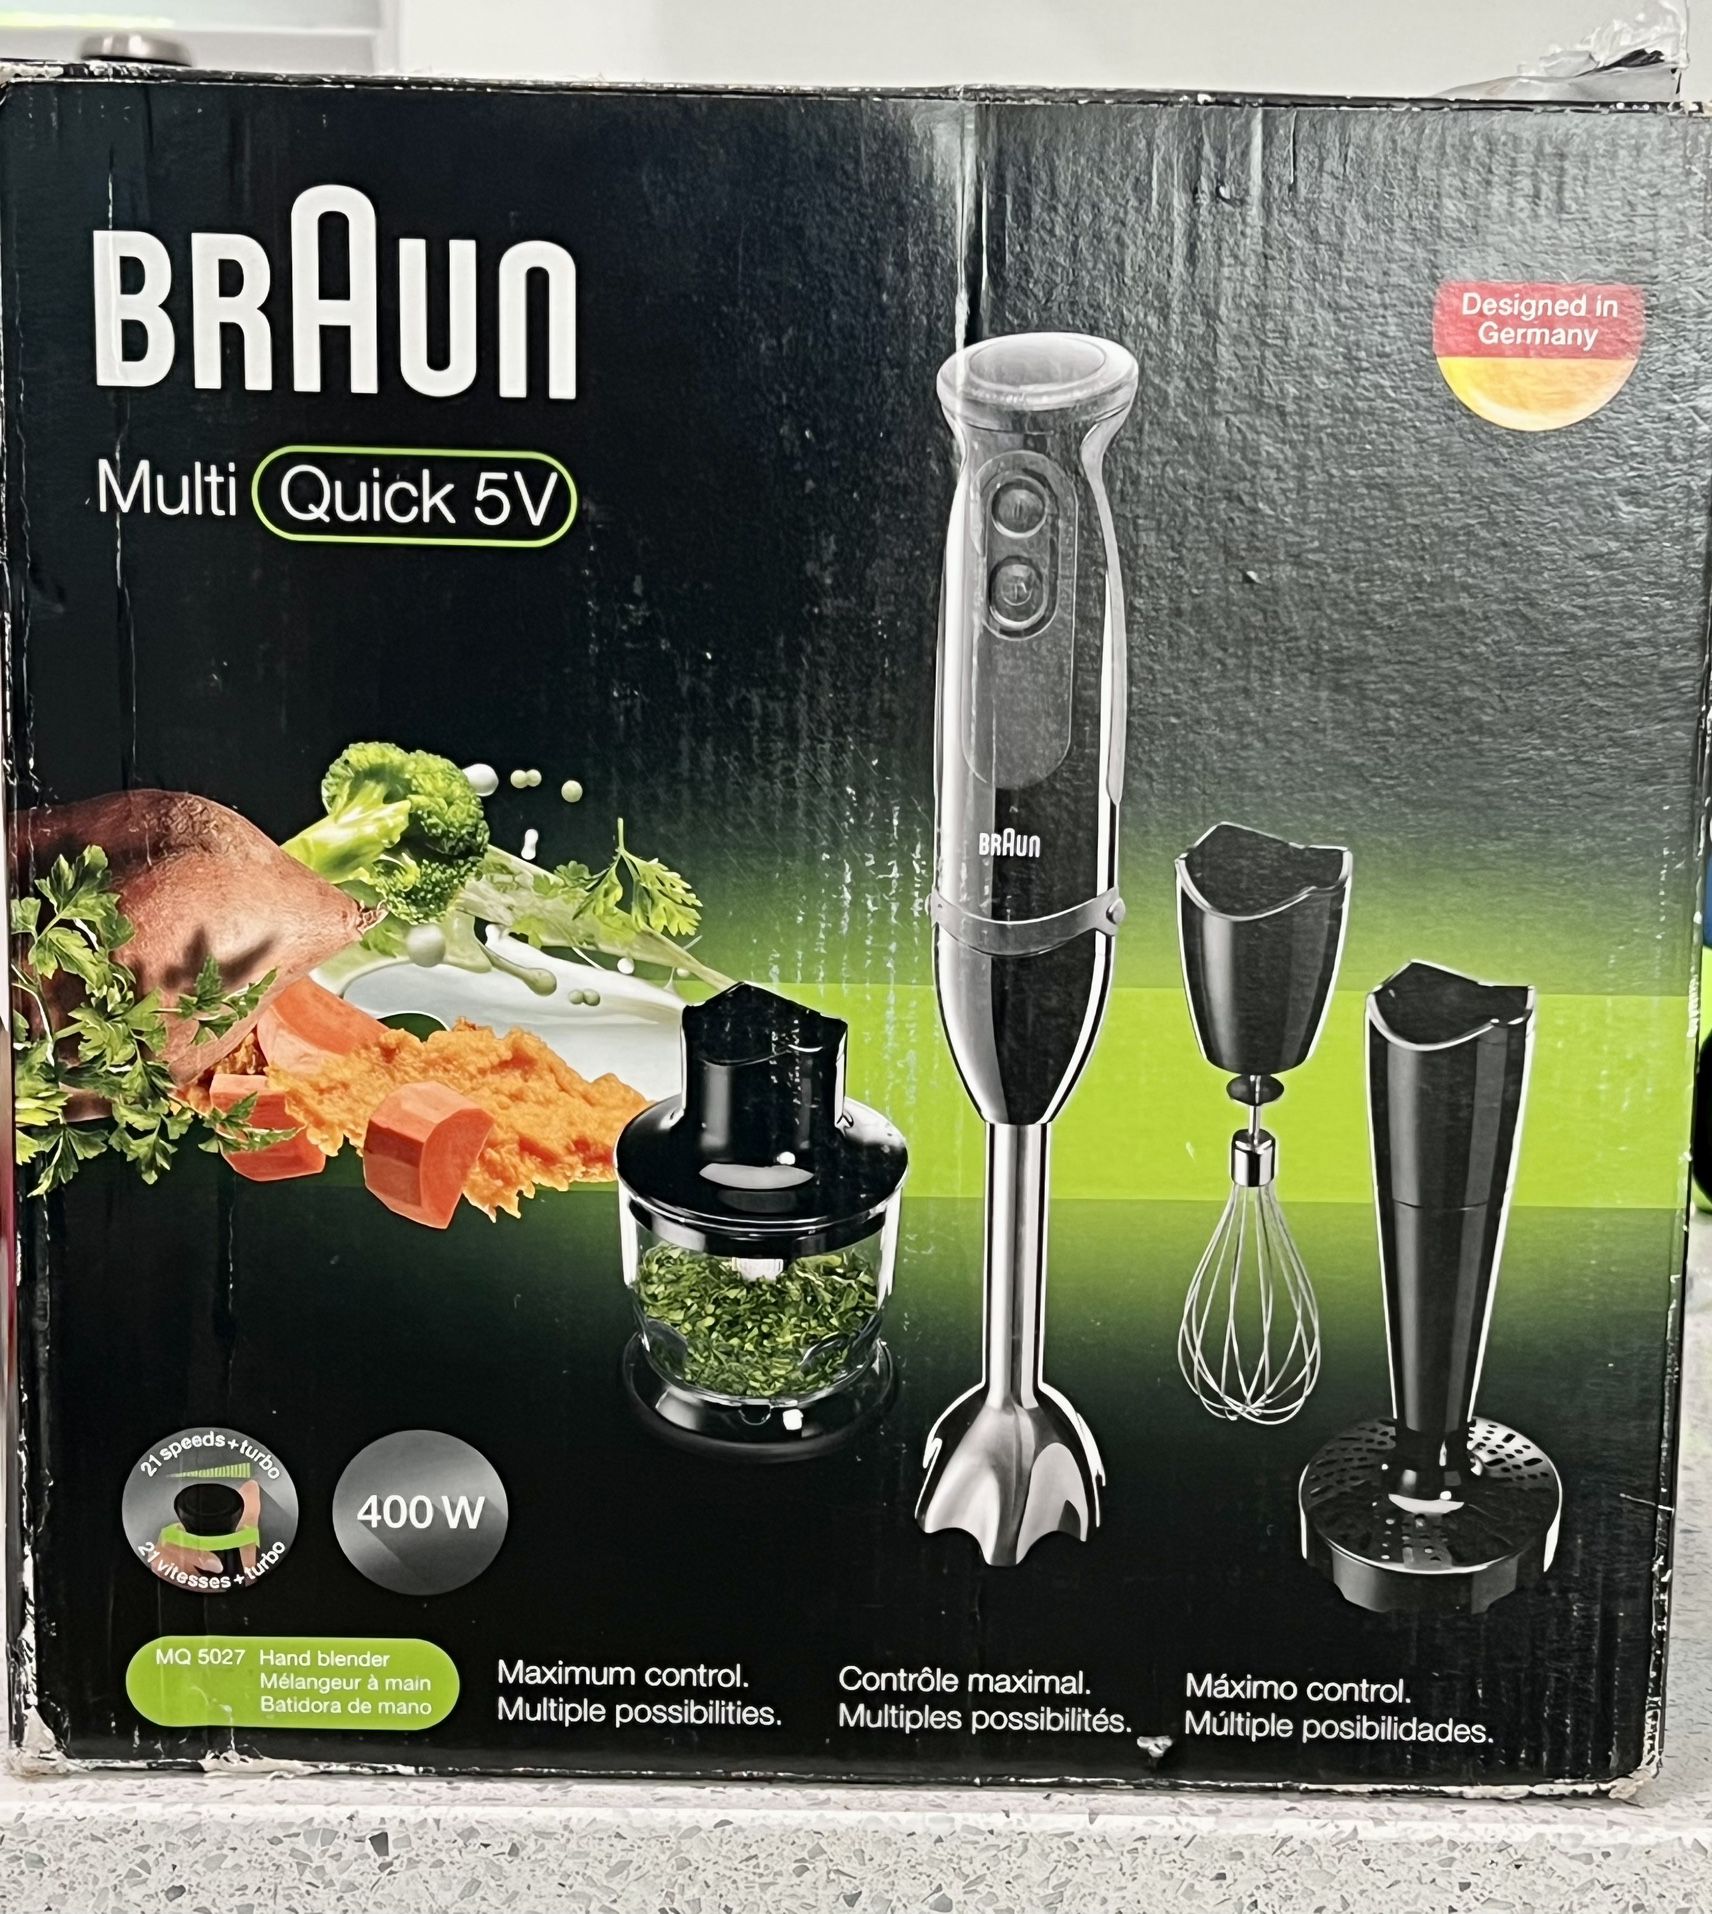 Braun Multiquick 5V Hand Blender 400w MQ 5027 New